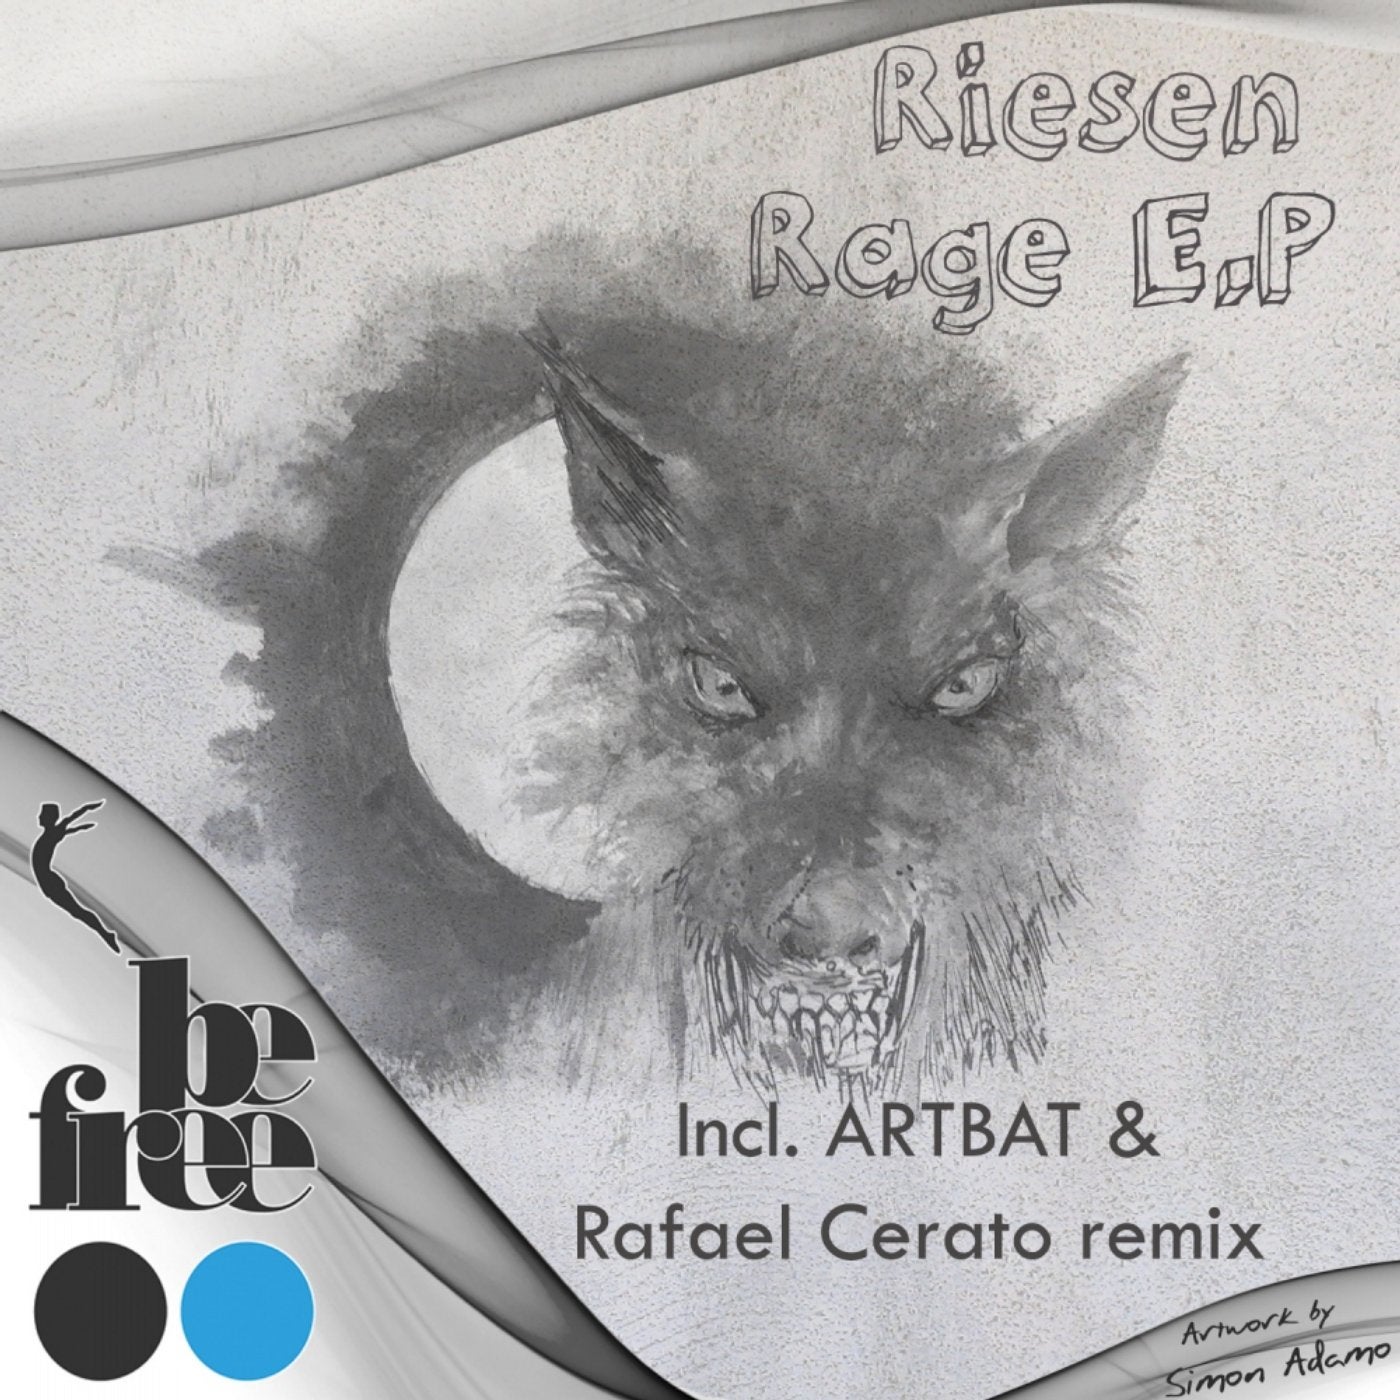 Oz artbat remix. ARTBAT - Forever. Rafael Cerato, ARTBAT - uplift. ARTBAT Original Mix mp3. ARTBAT age of Love.